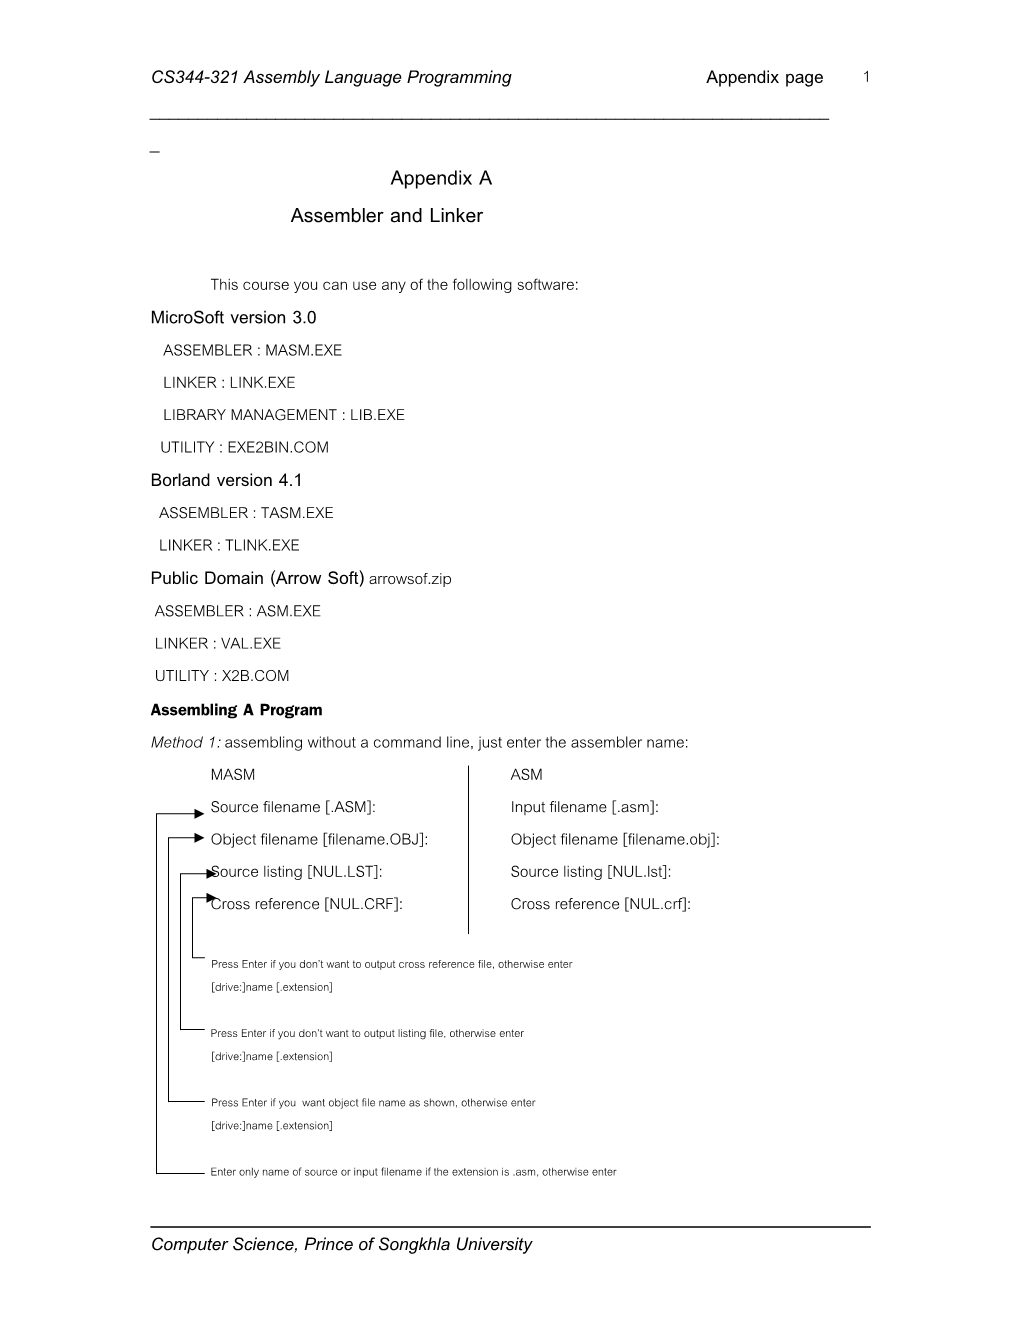 CS344-321 Assembly Language Programming Appendix Page